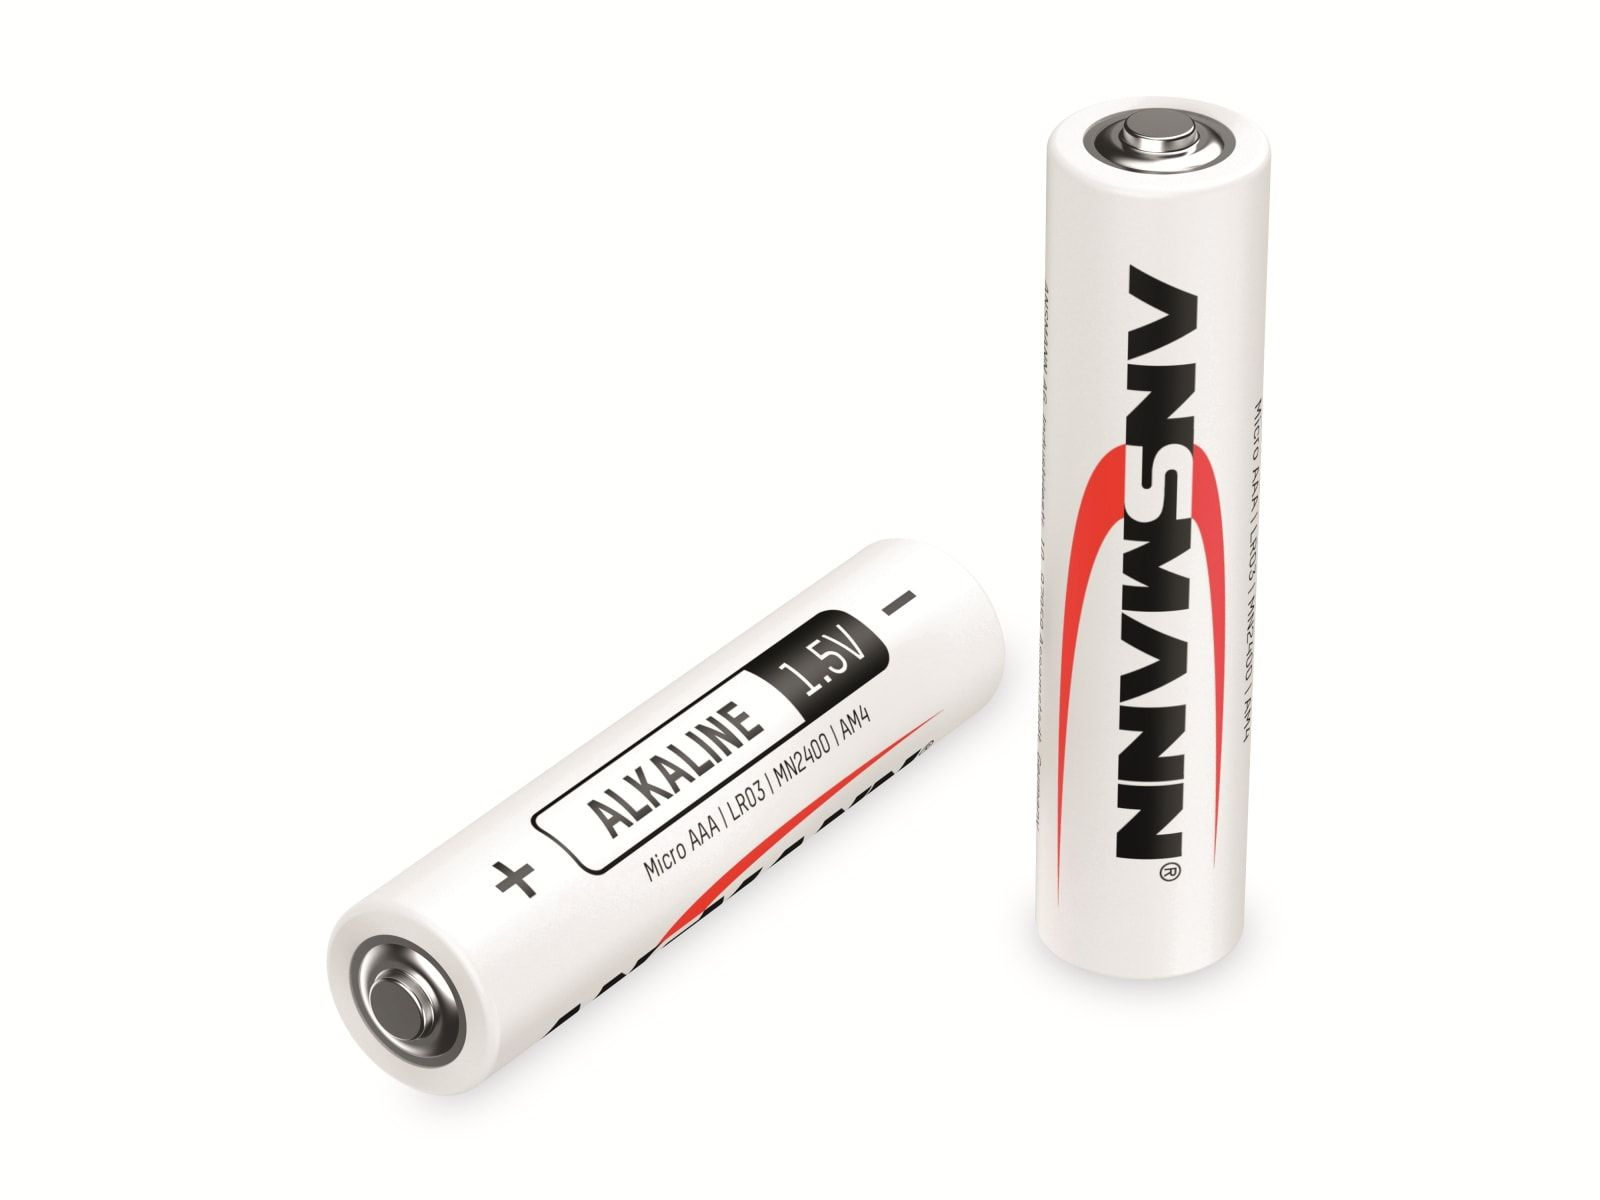 Alkaline, ANSMANN Micro-Batterie-Set, 42 Batterien Stück Alkaline